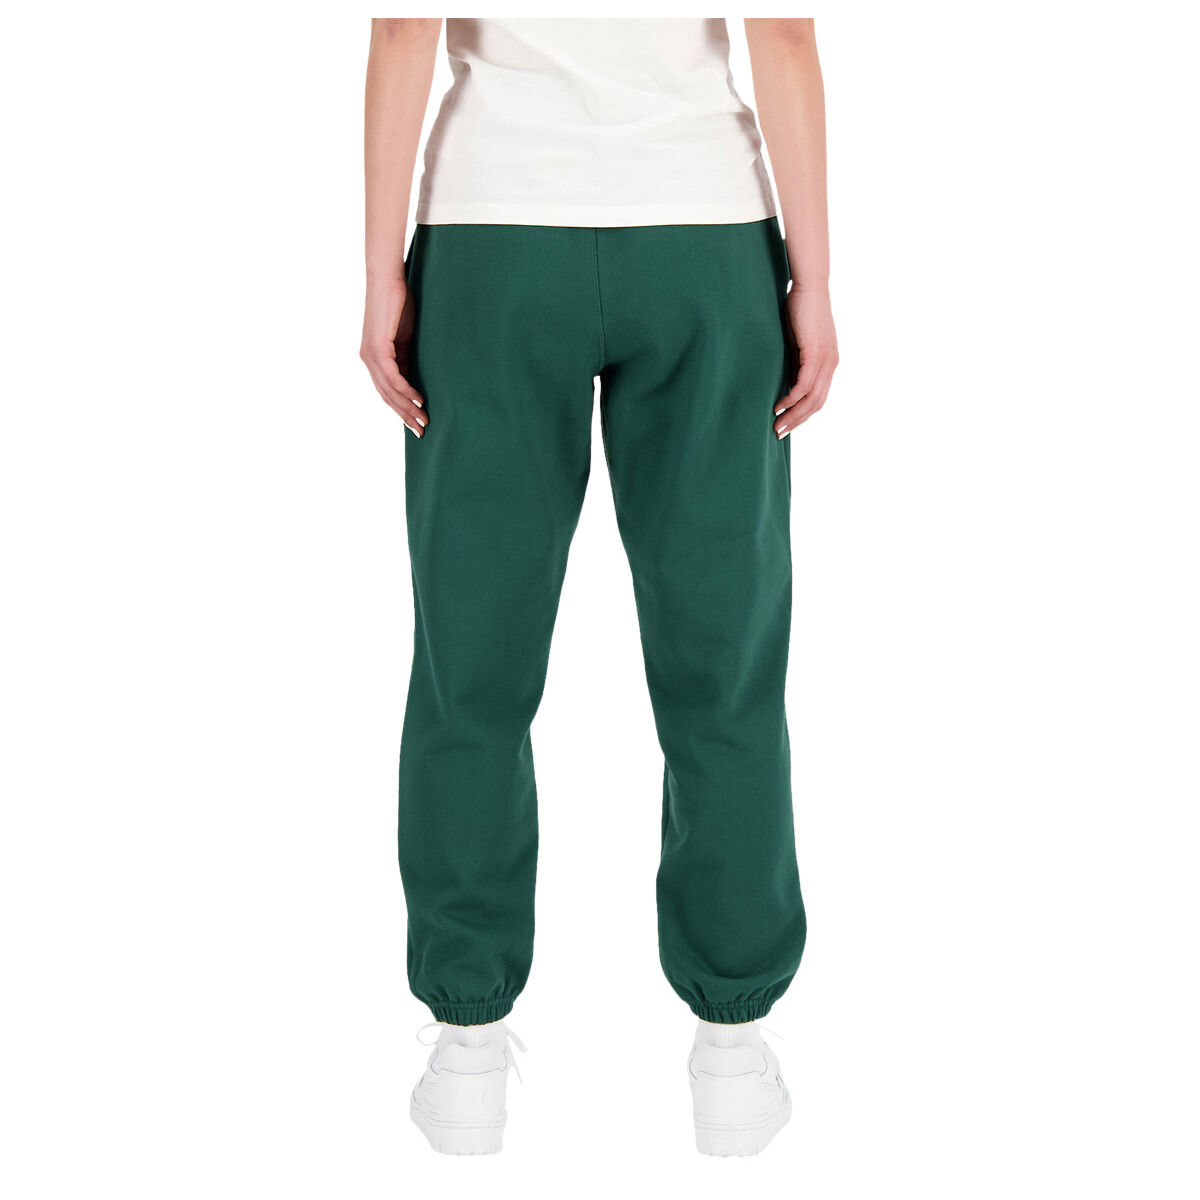 Russell Athletic Athletic Pants Men's Dark Green Used 3XL - Locker